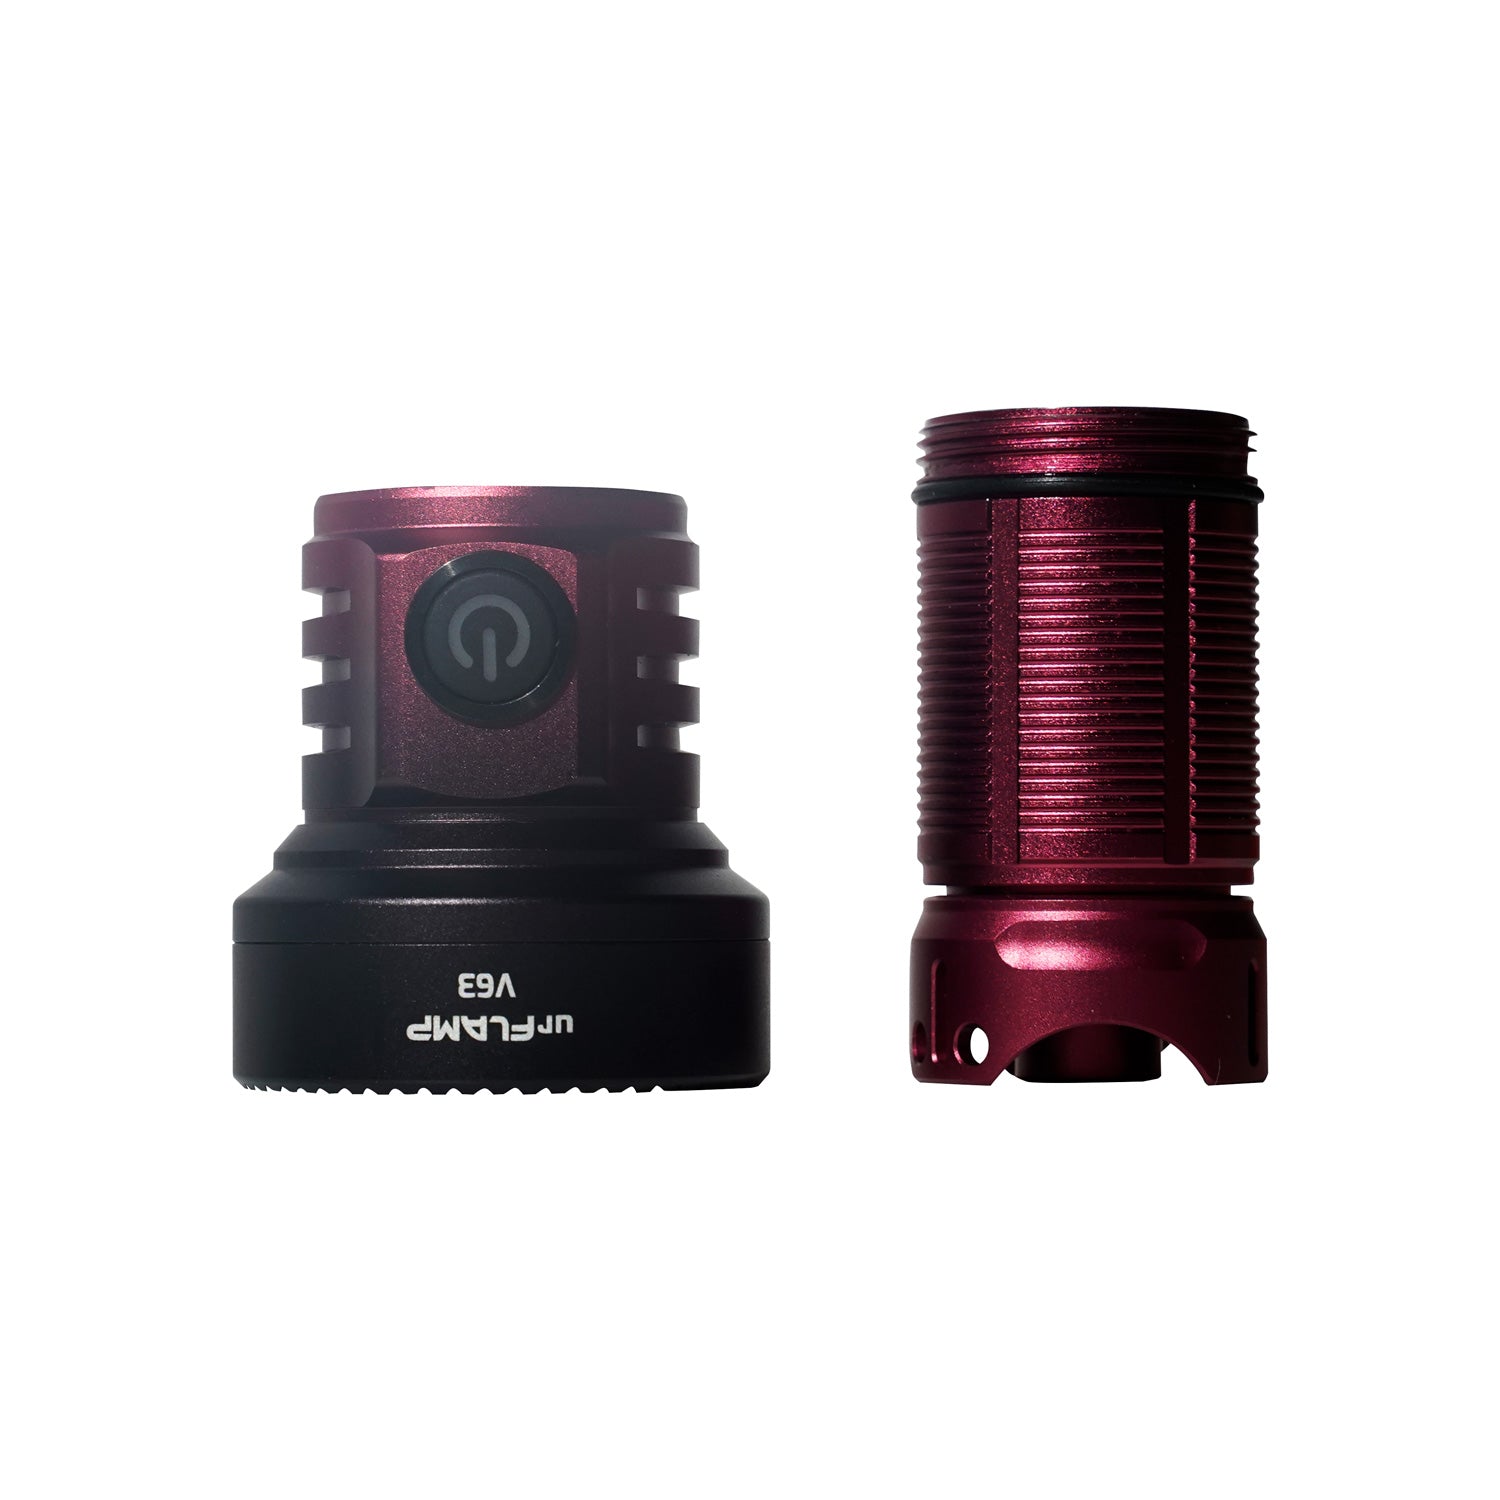 urFlamp V63: Super Powerful EDC Flashlight in Pocket